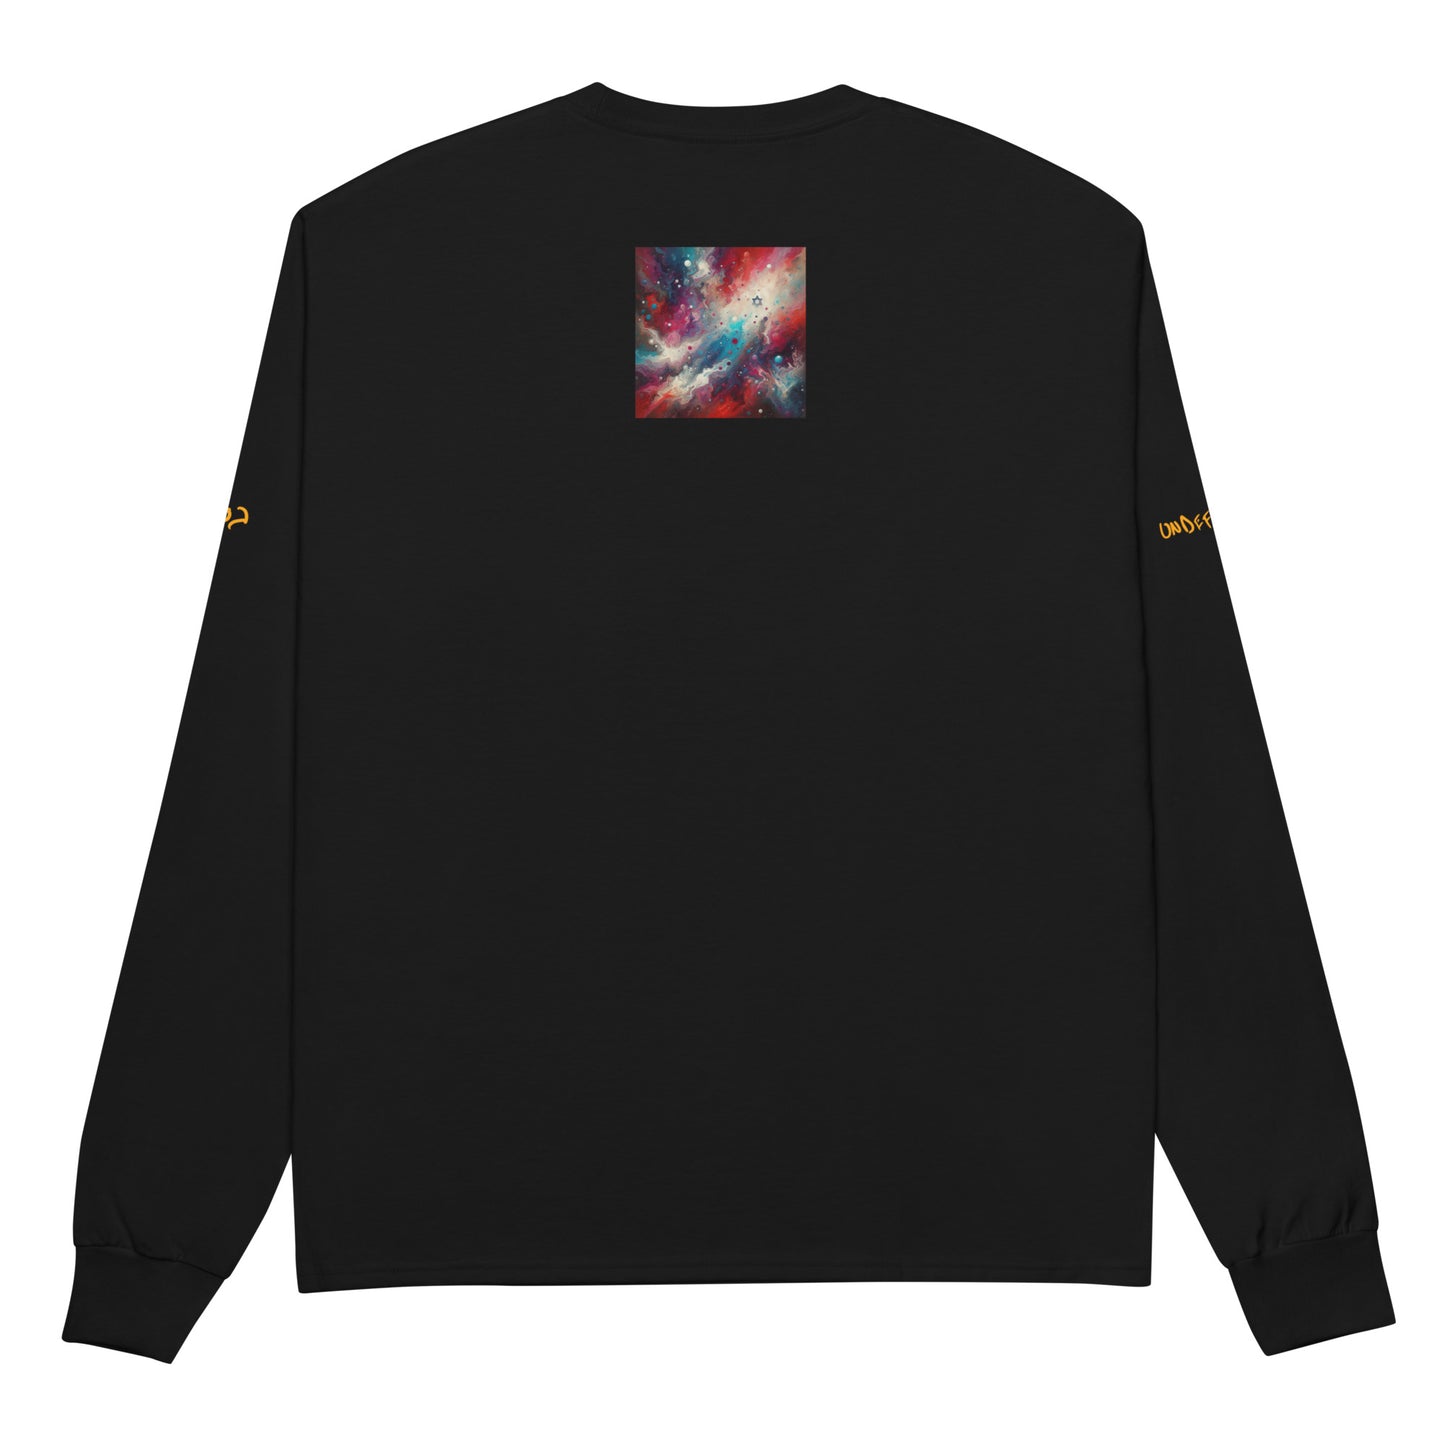 BSD UNDEFEATED - Men's Champion Long Sleeve Shirt with custom print